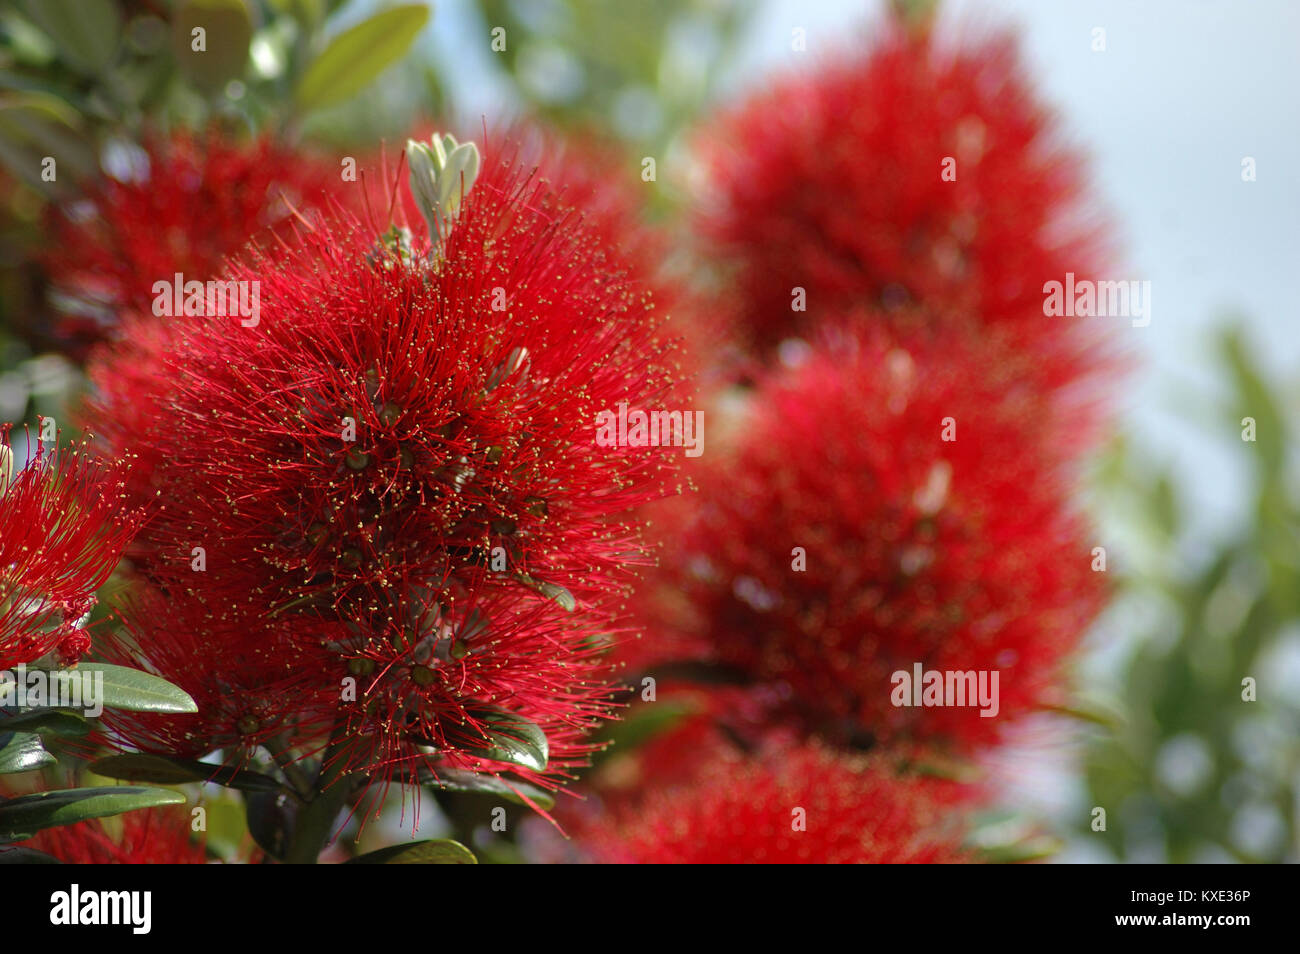 red fluffy flowers of the Puhutakawa tree; Metrosideros excelsa, New Zealand Stock Photo